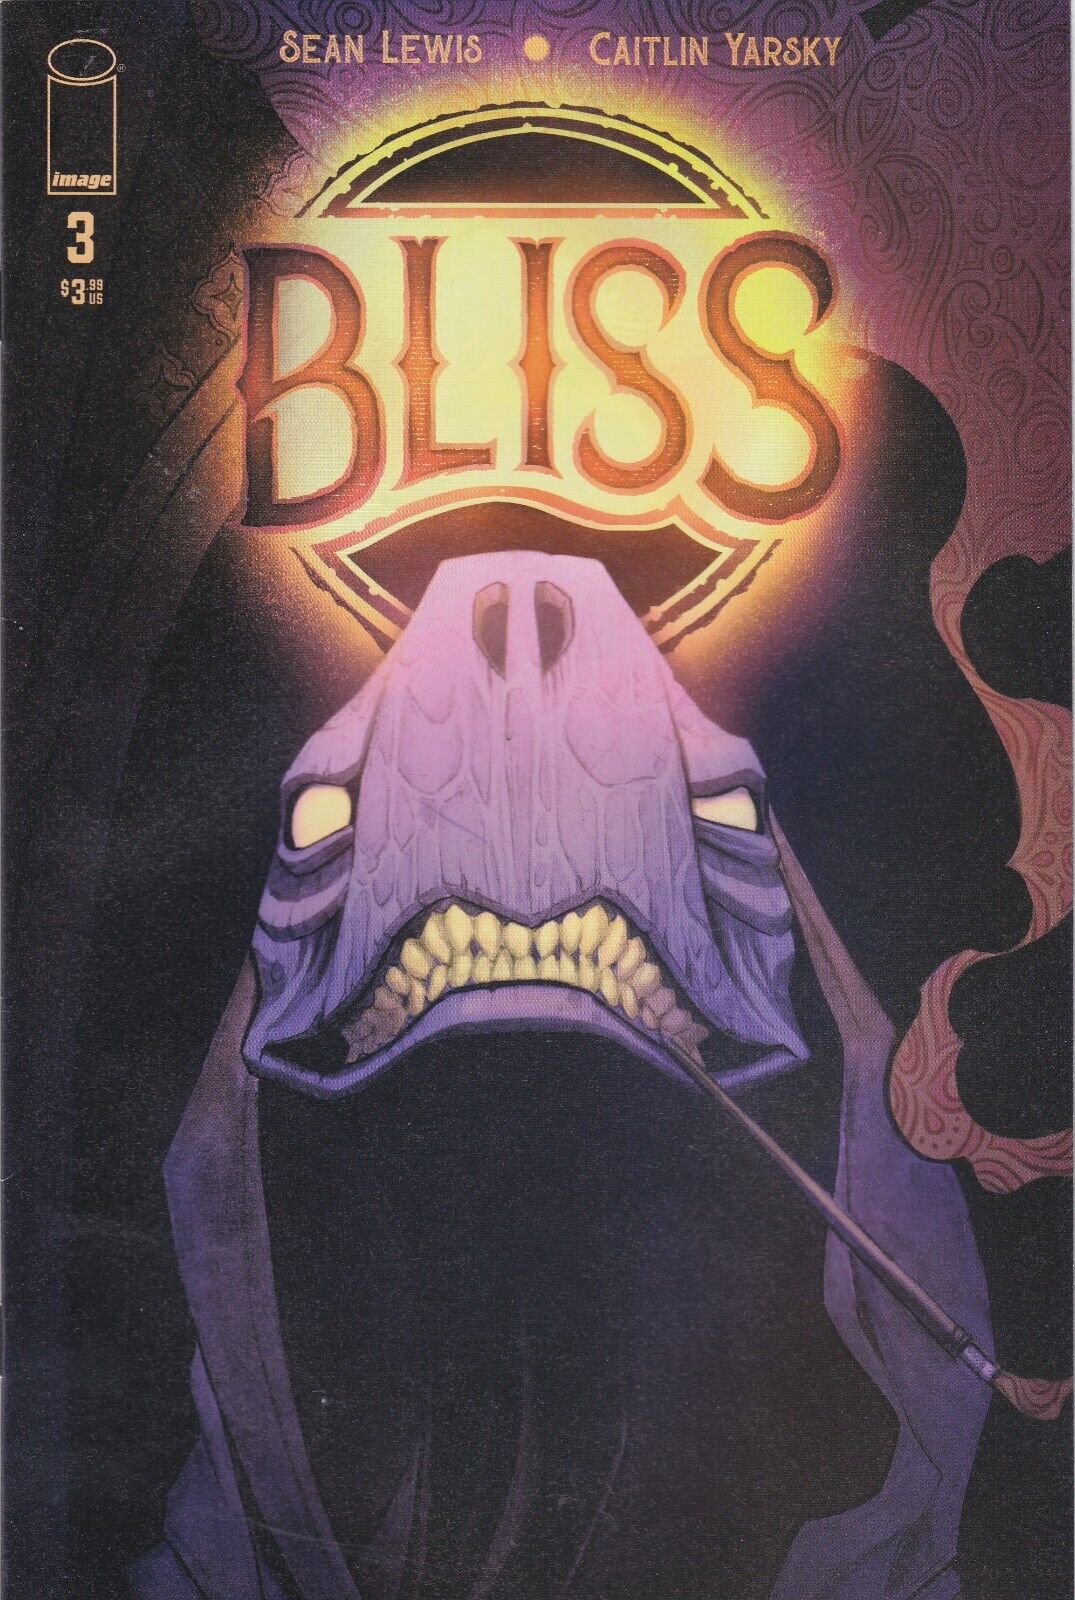 Bliss #3: Image Comics (2020)  VF/NM  9.0